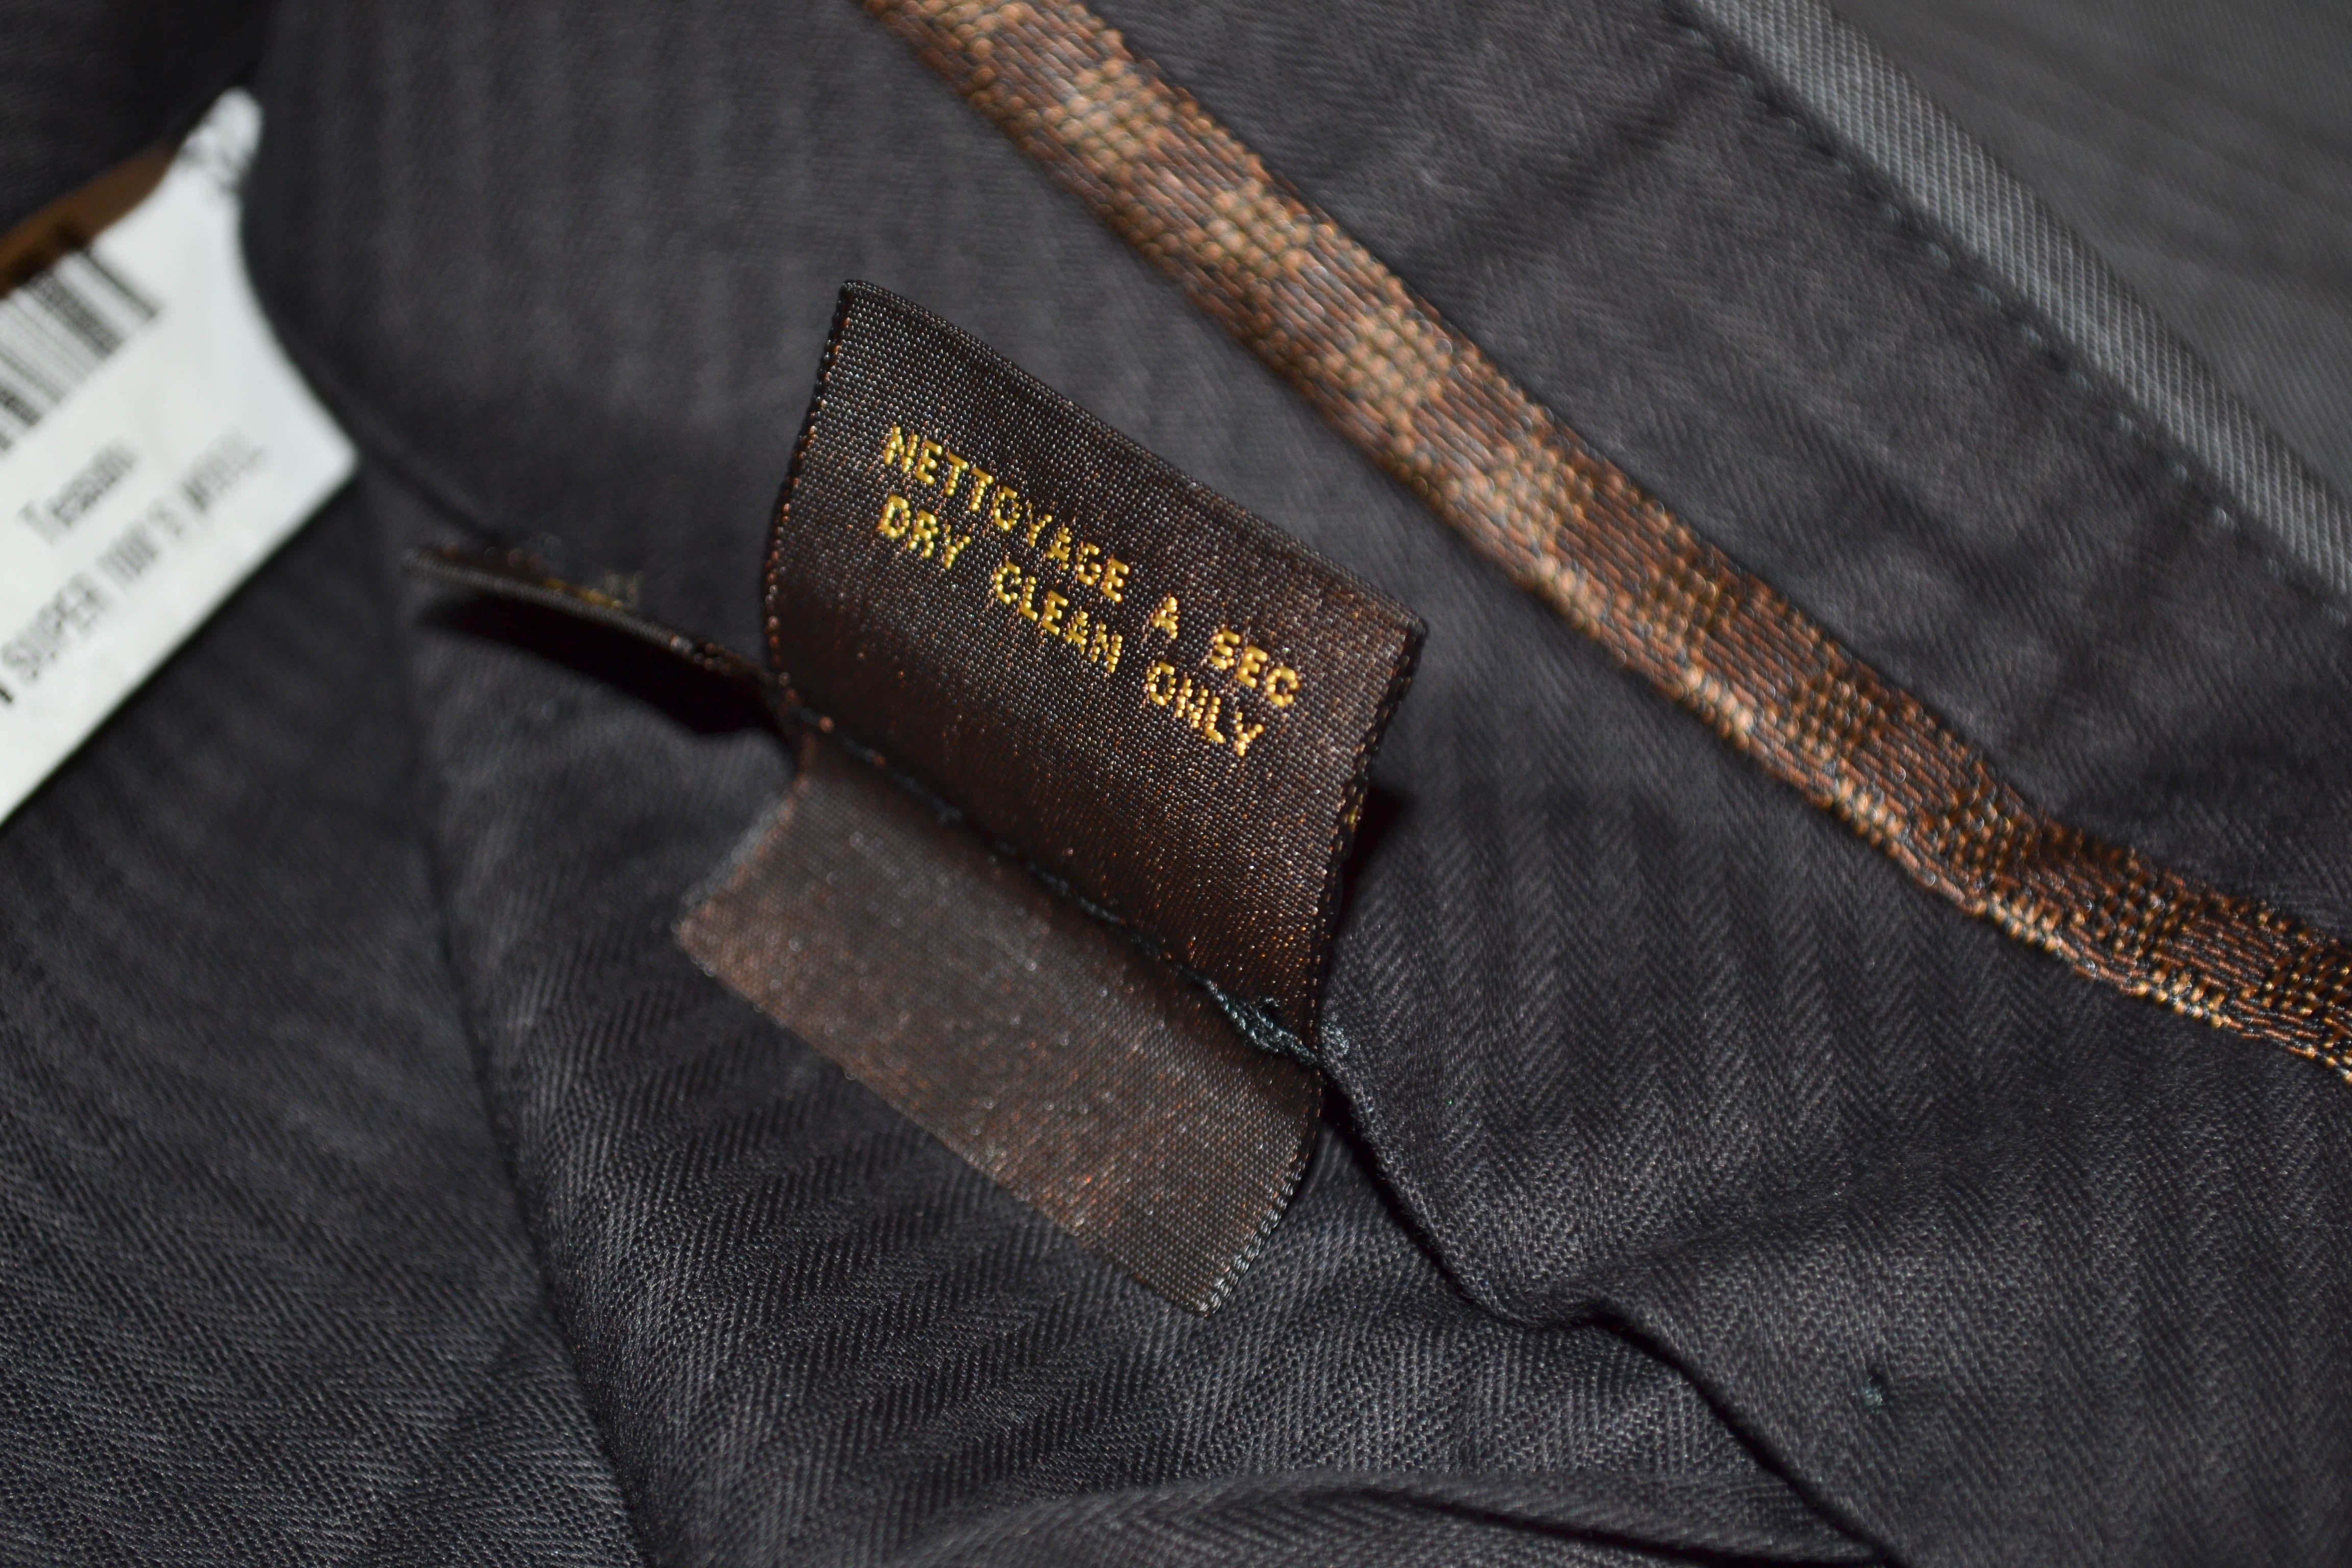 Jeans Louis Vuitton Grey size 33 US in Cotton - 25191475